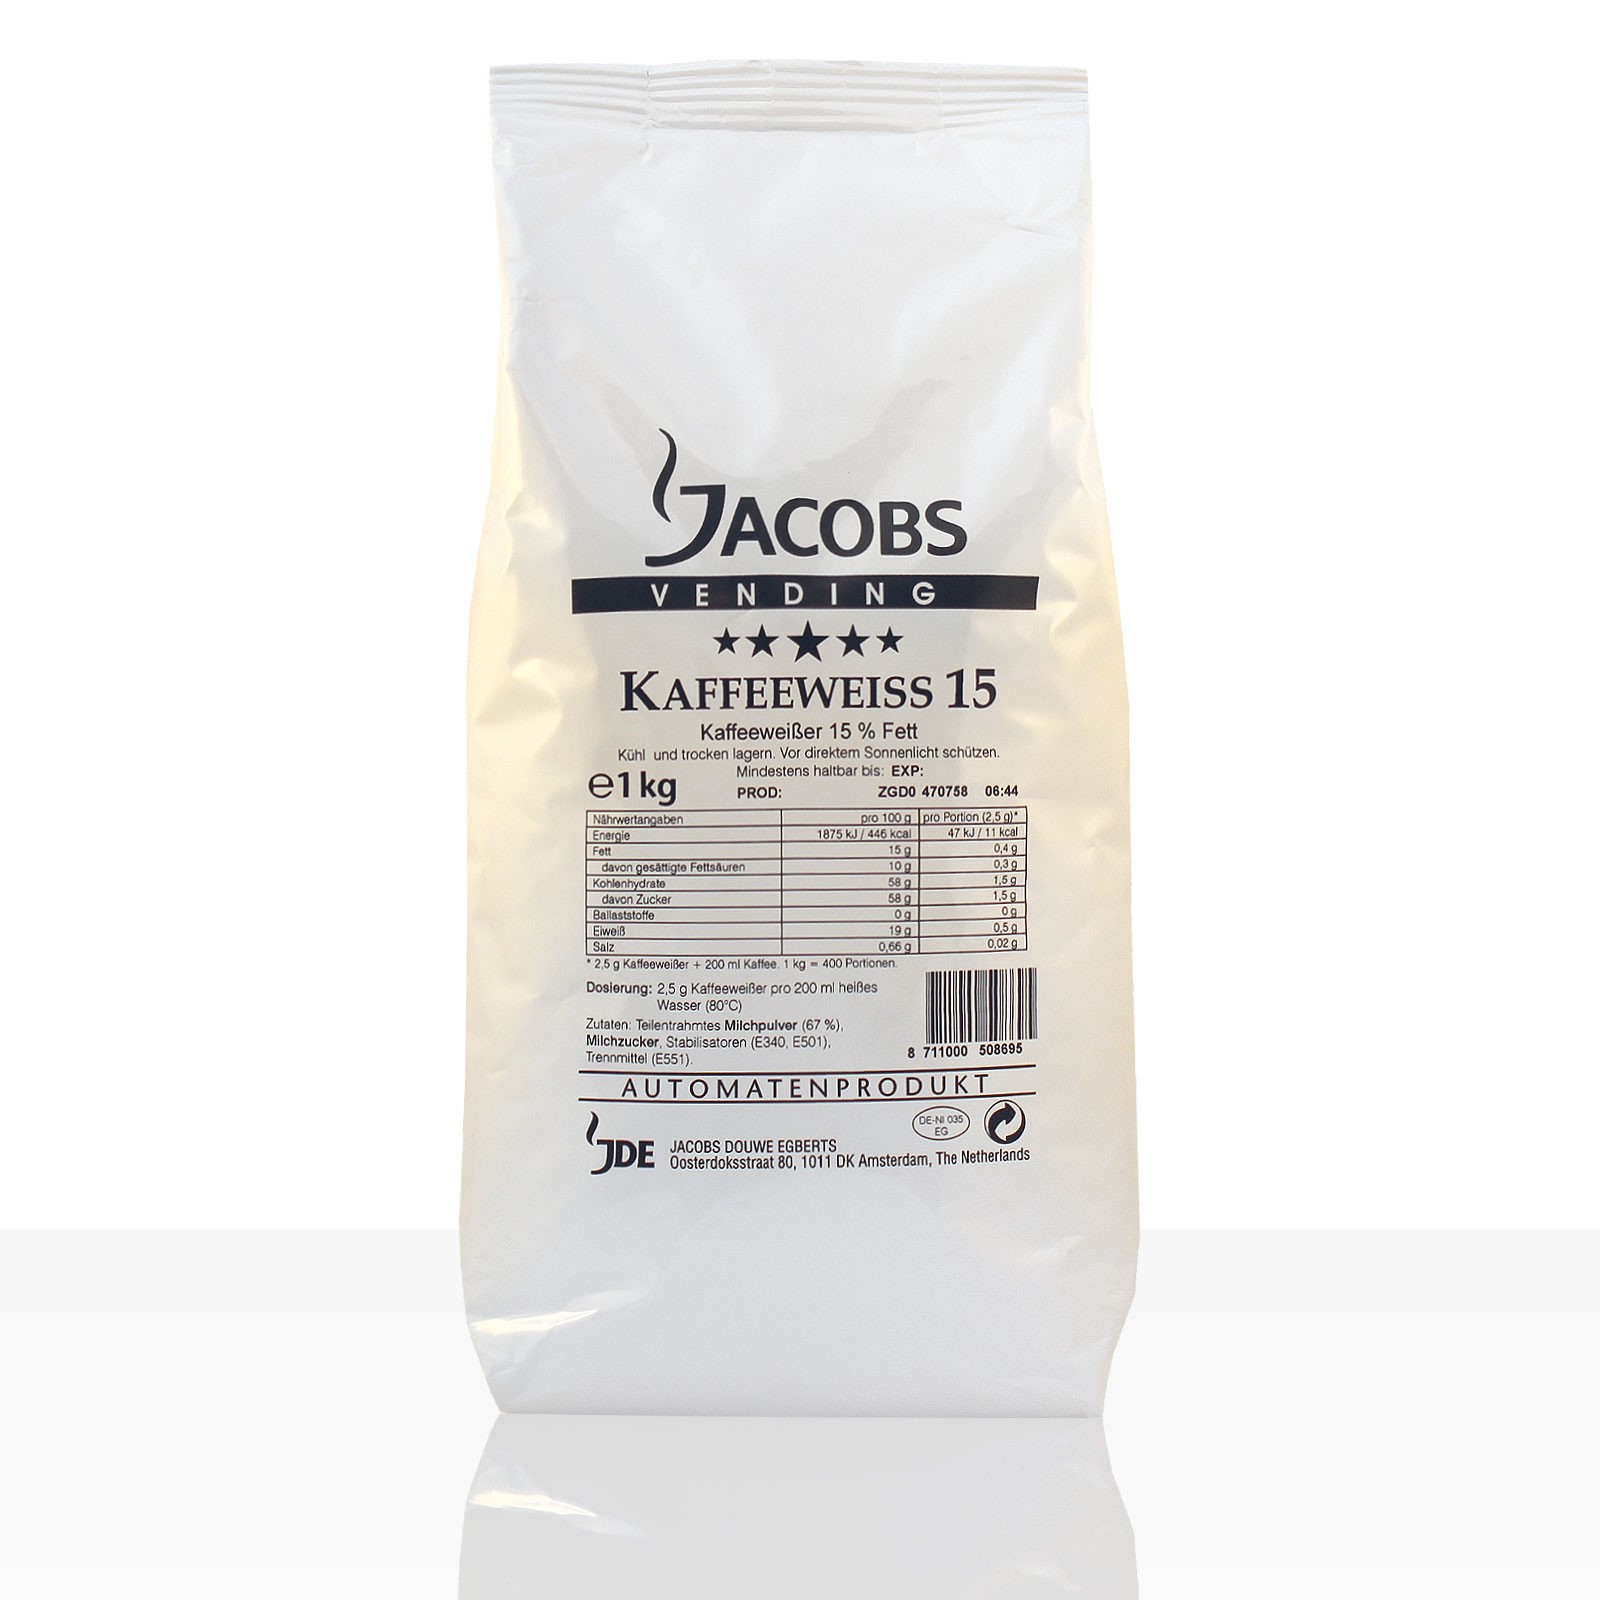 Jacobs Kaffeeweisser 15 % Fett 10 x 1 kg im Karton